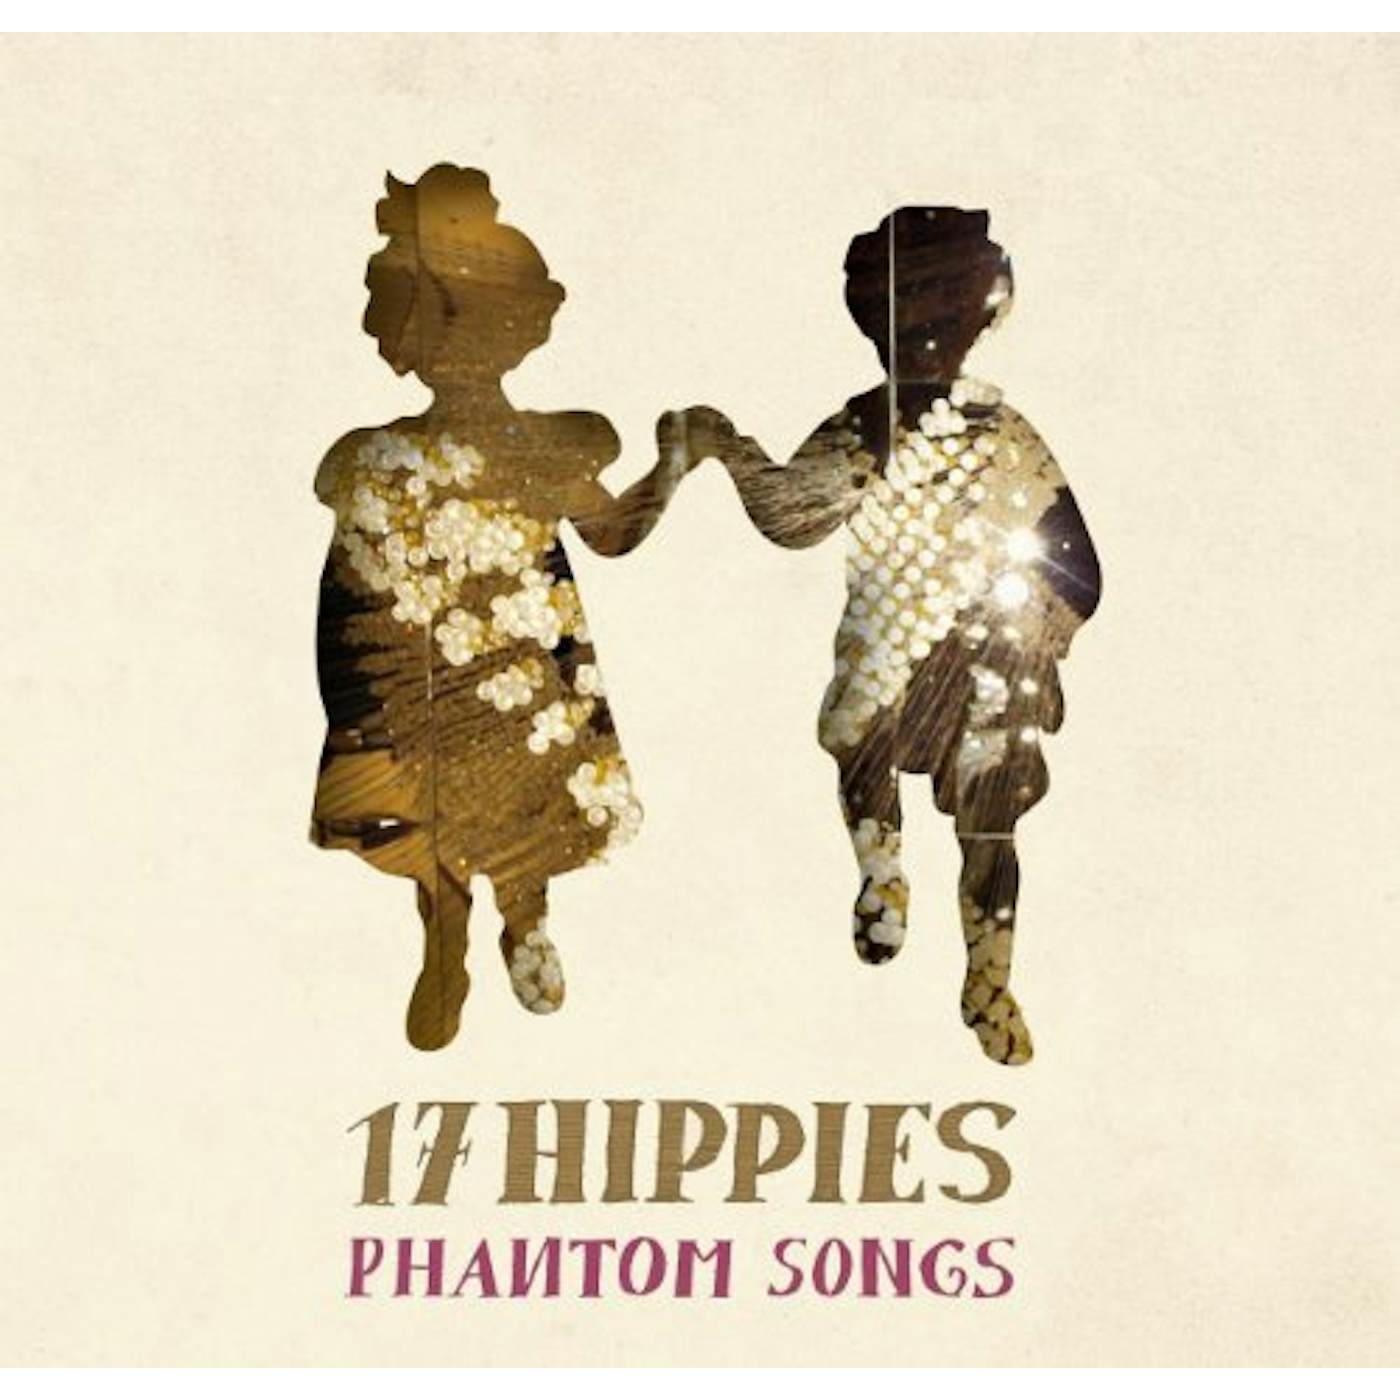 17 Hippies Phantom Songs Vinyl Record